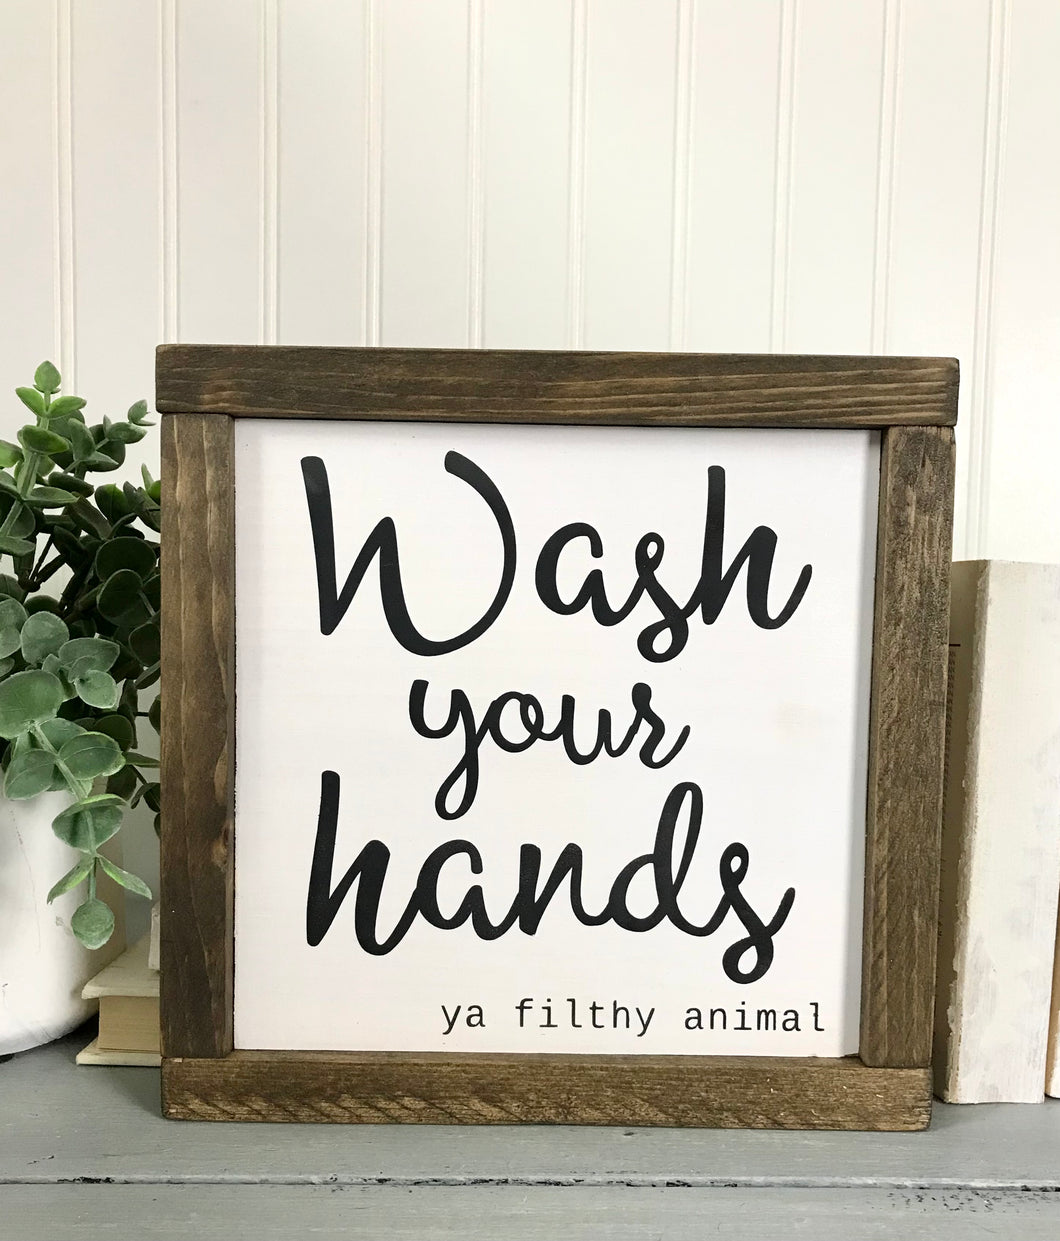 Wash Your Hands ya filthy animal